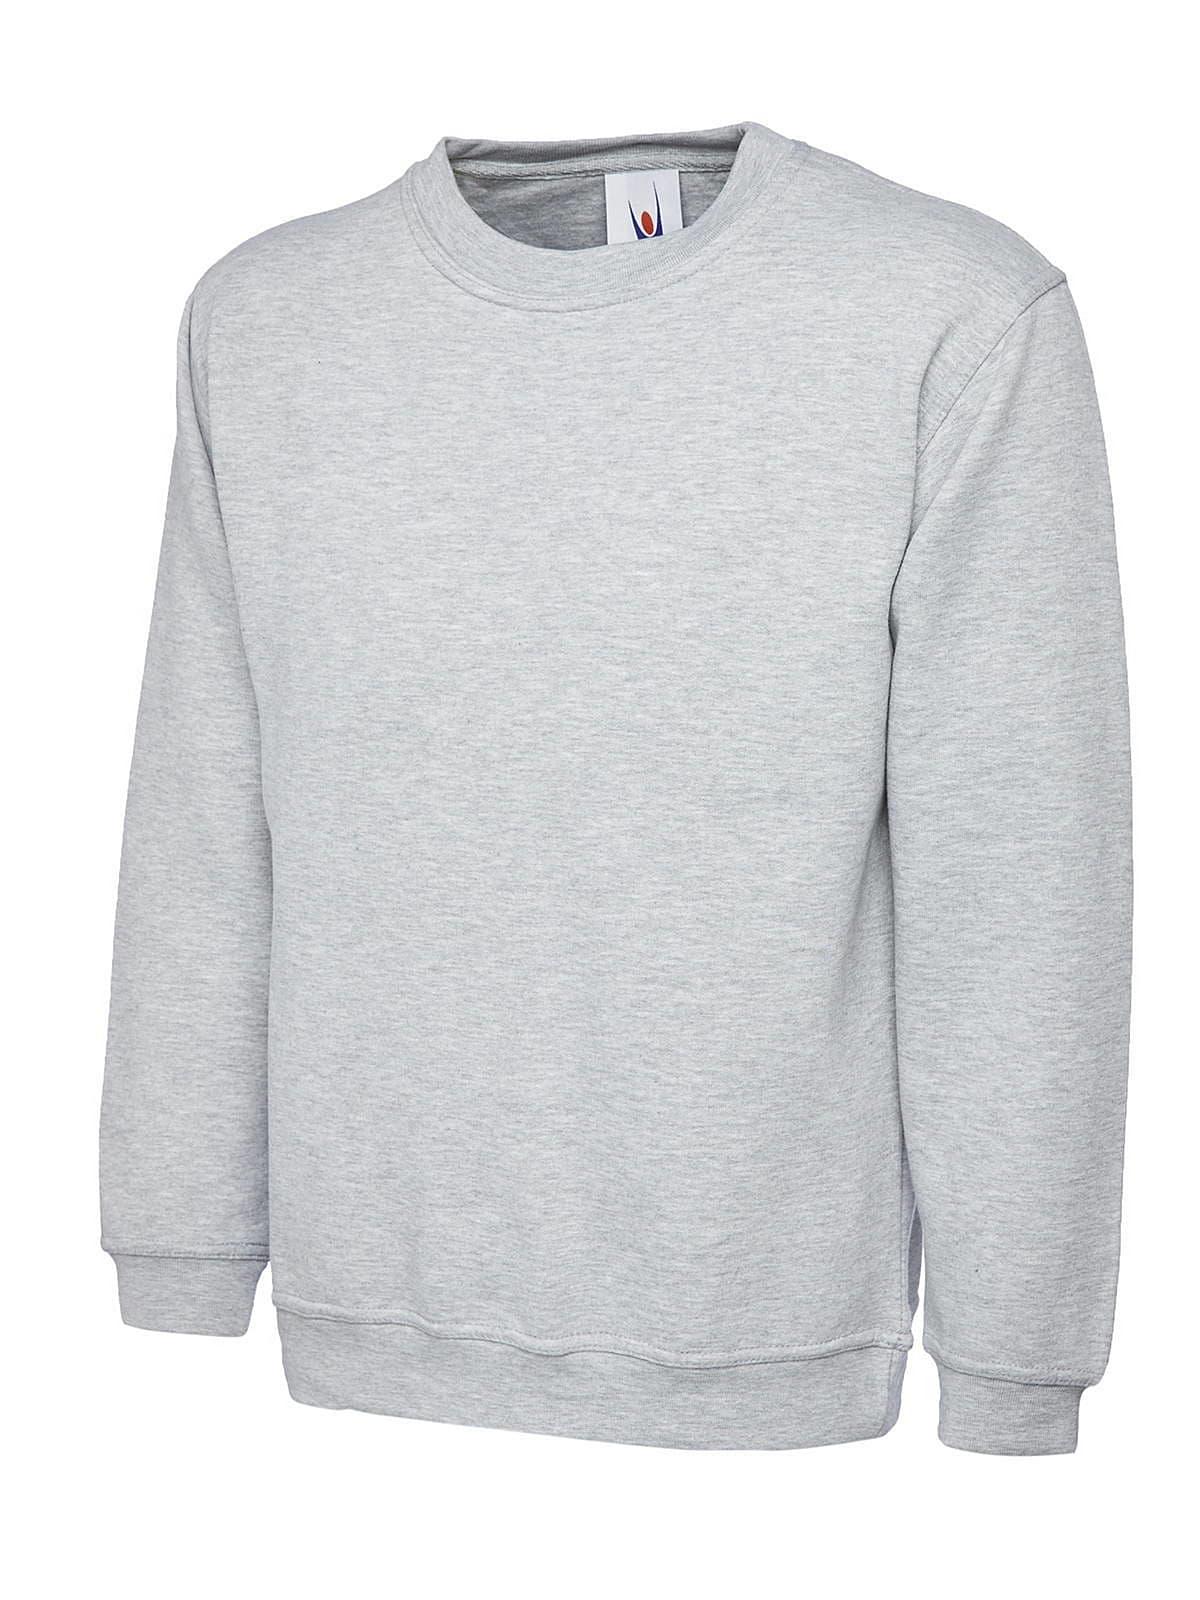 Uneek 300GSM Classic Sweatshirt in Heather Grey (Product Code: UC203)